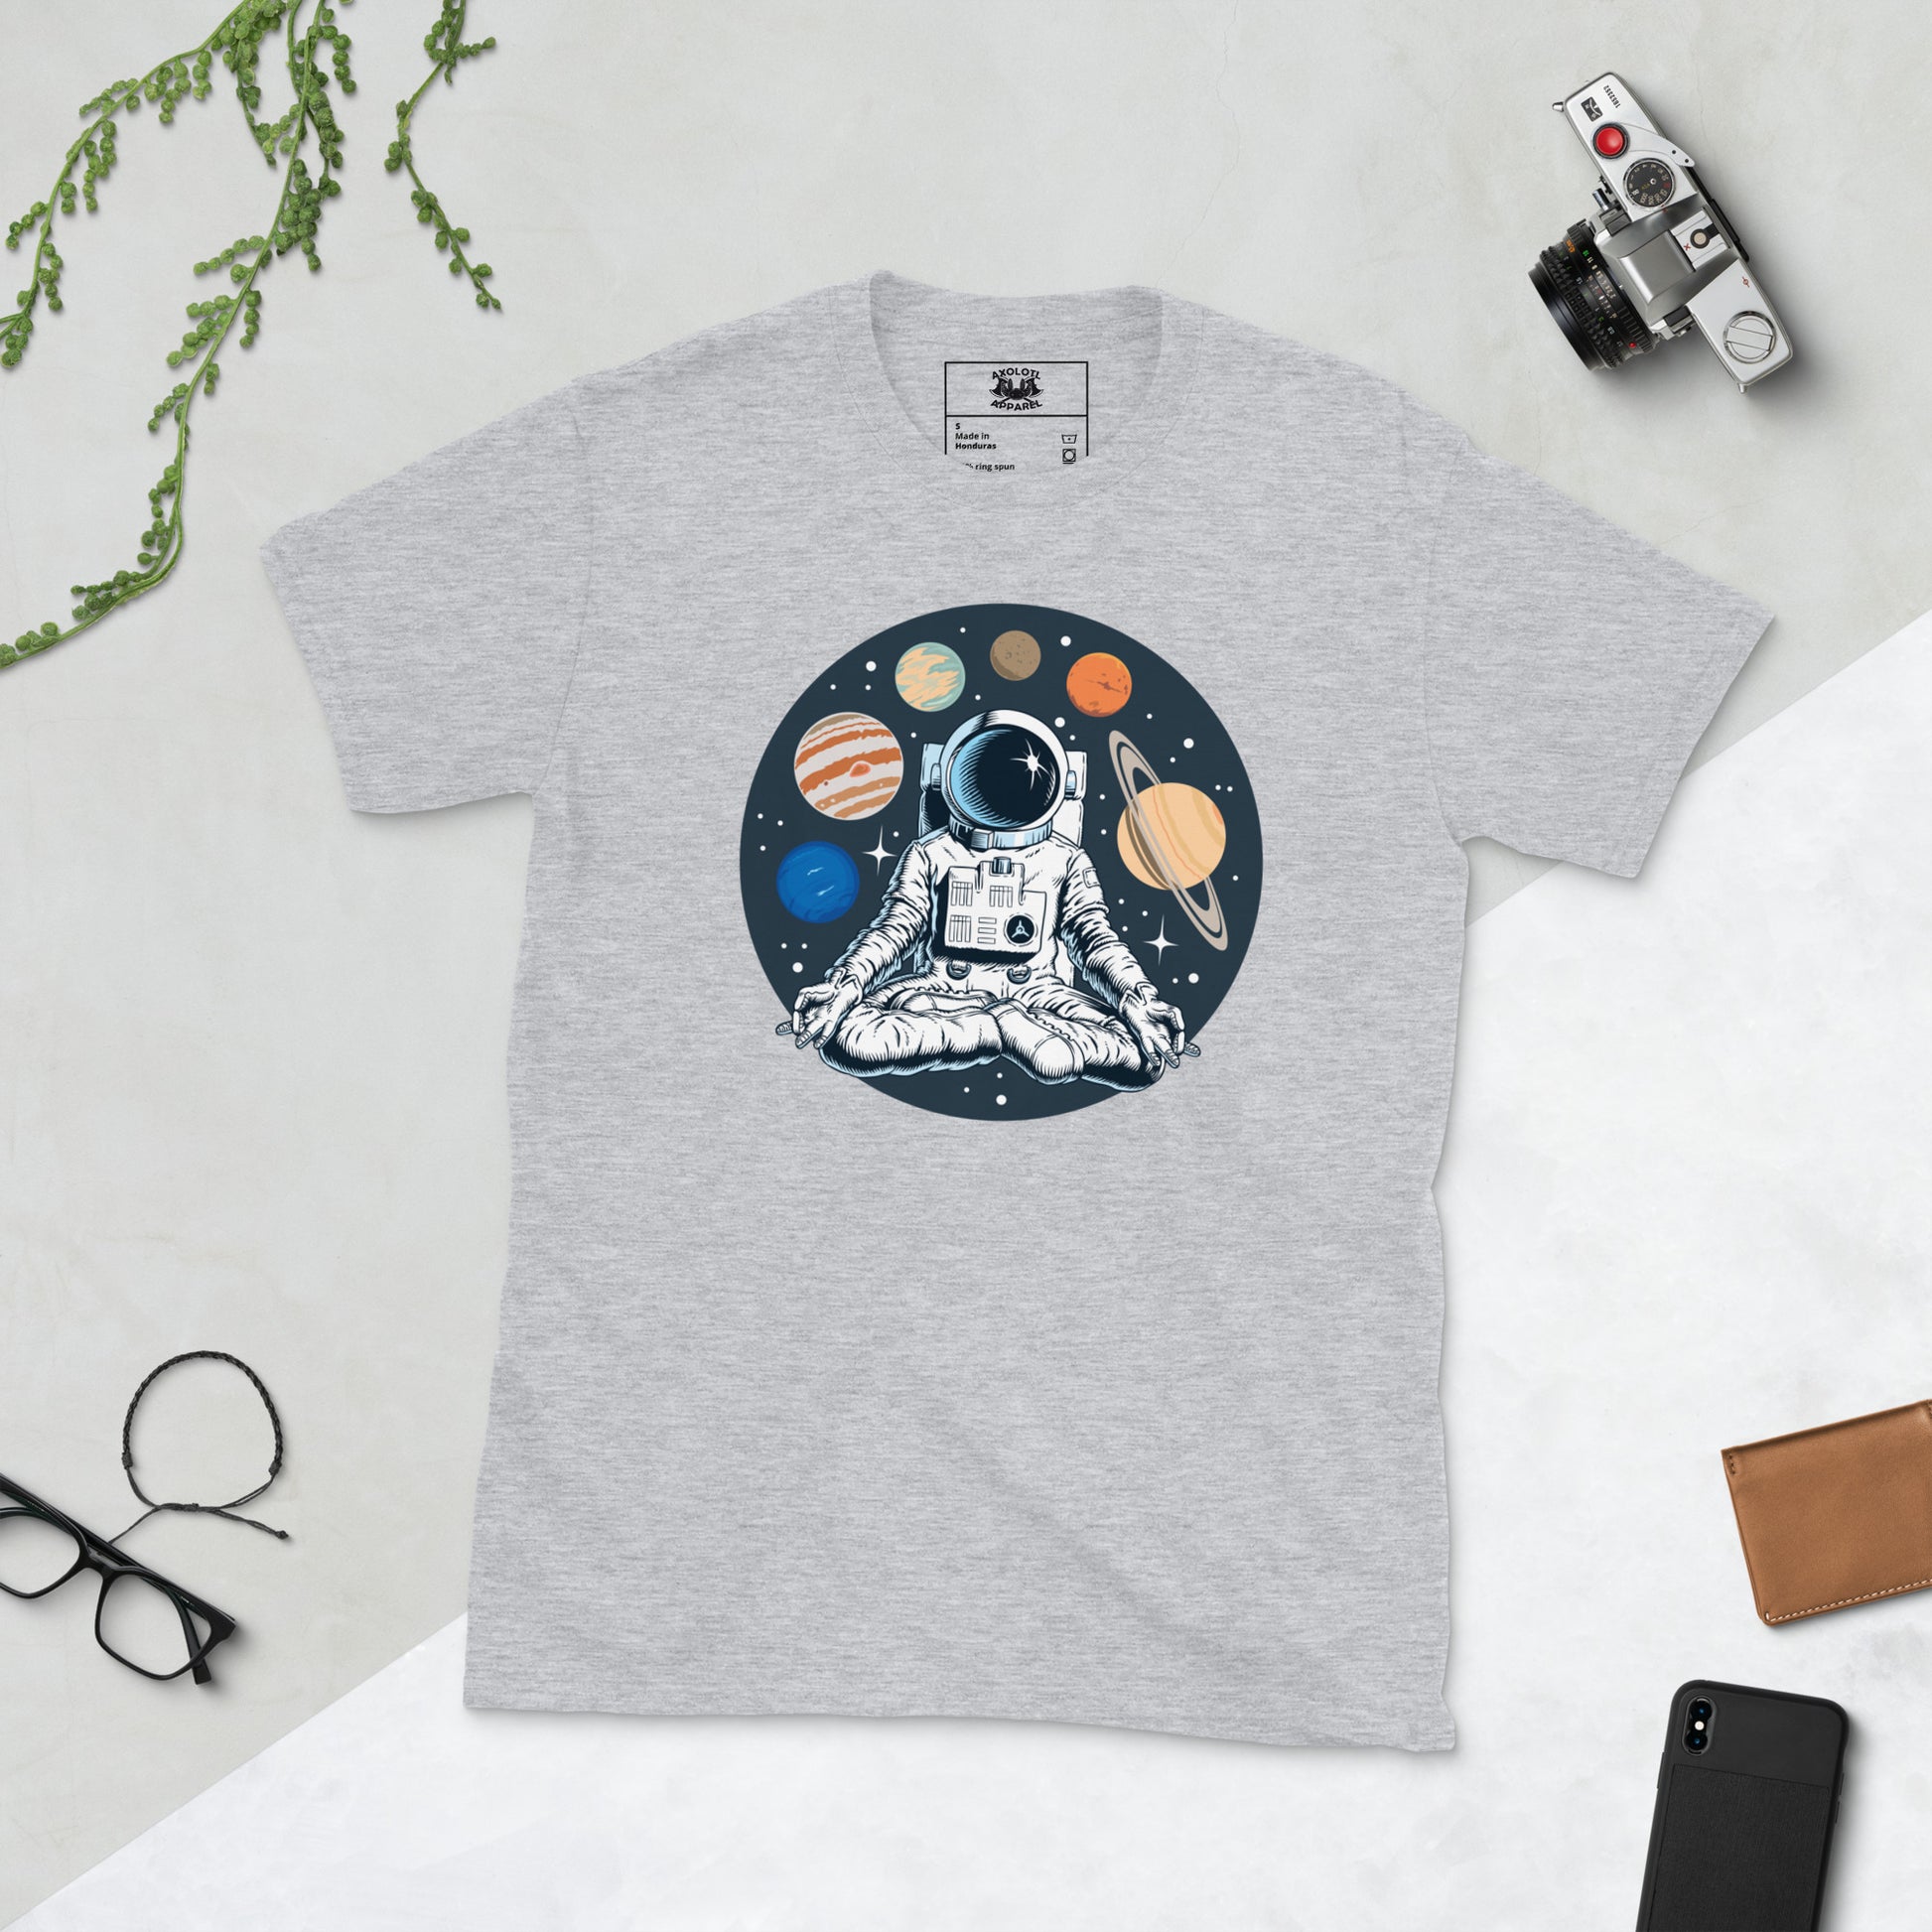 Ohmstronaut Short-sleeve Unisex Cosmic Meditating Astronaut T-shirt Light Grey Flat